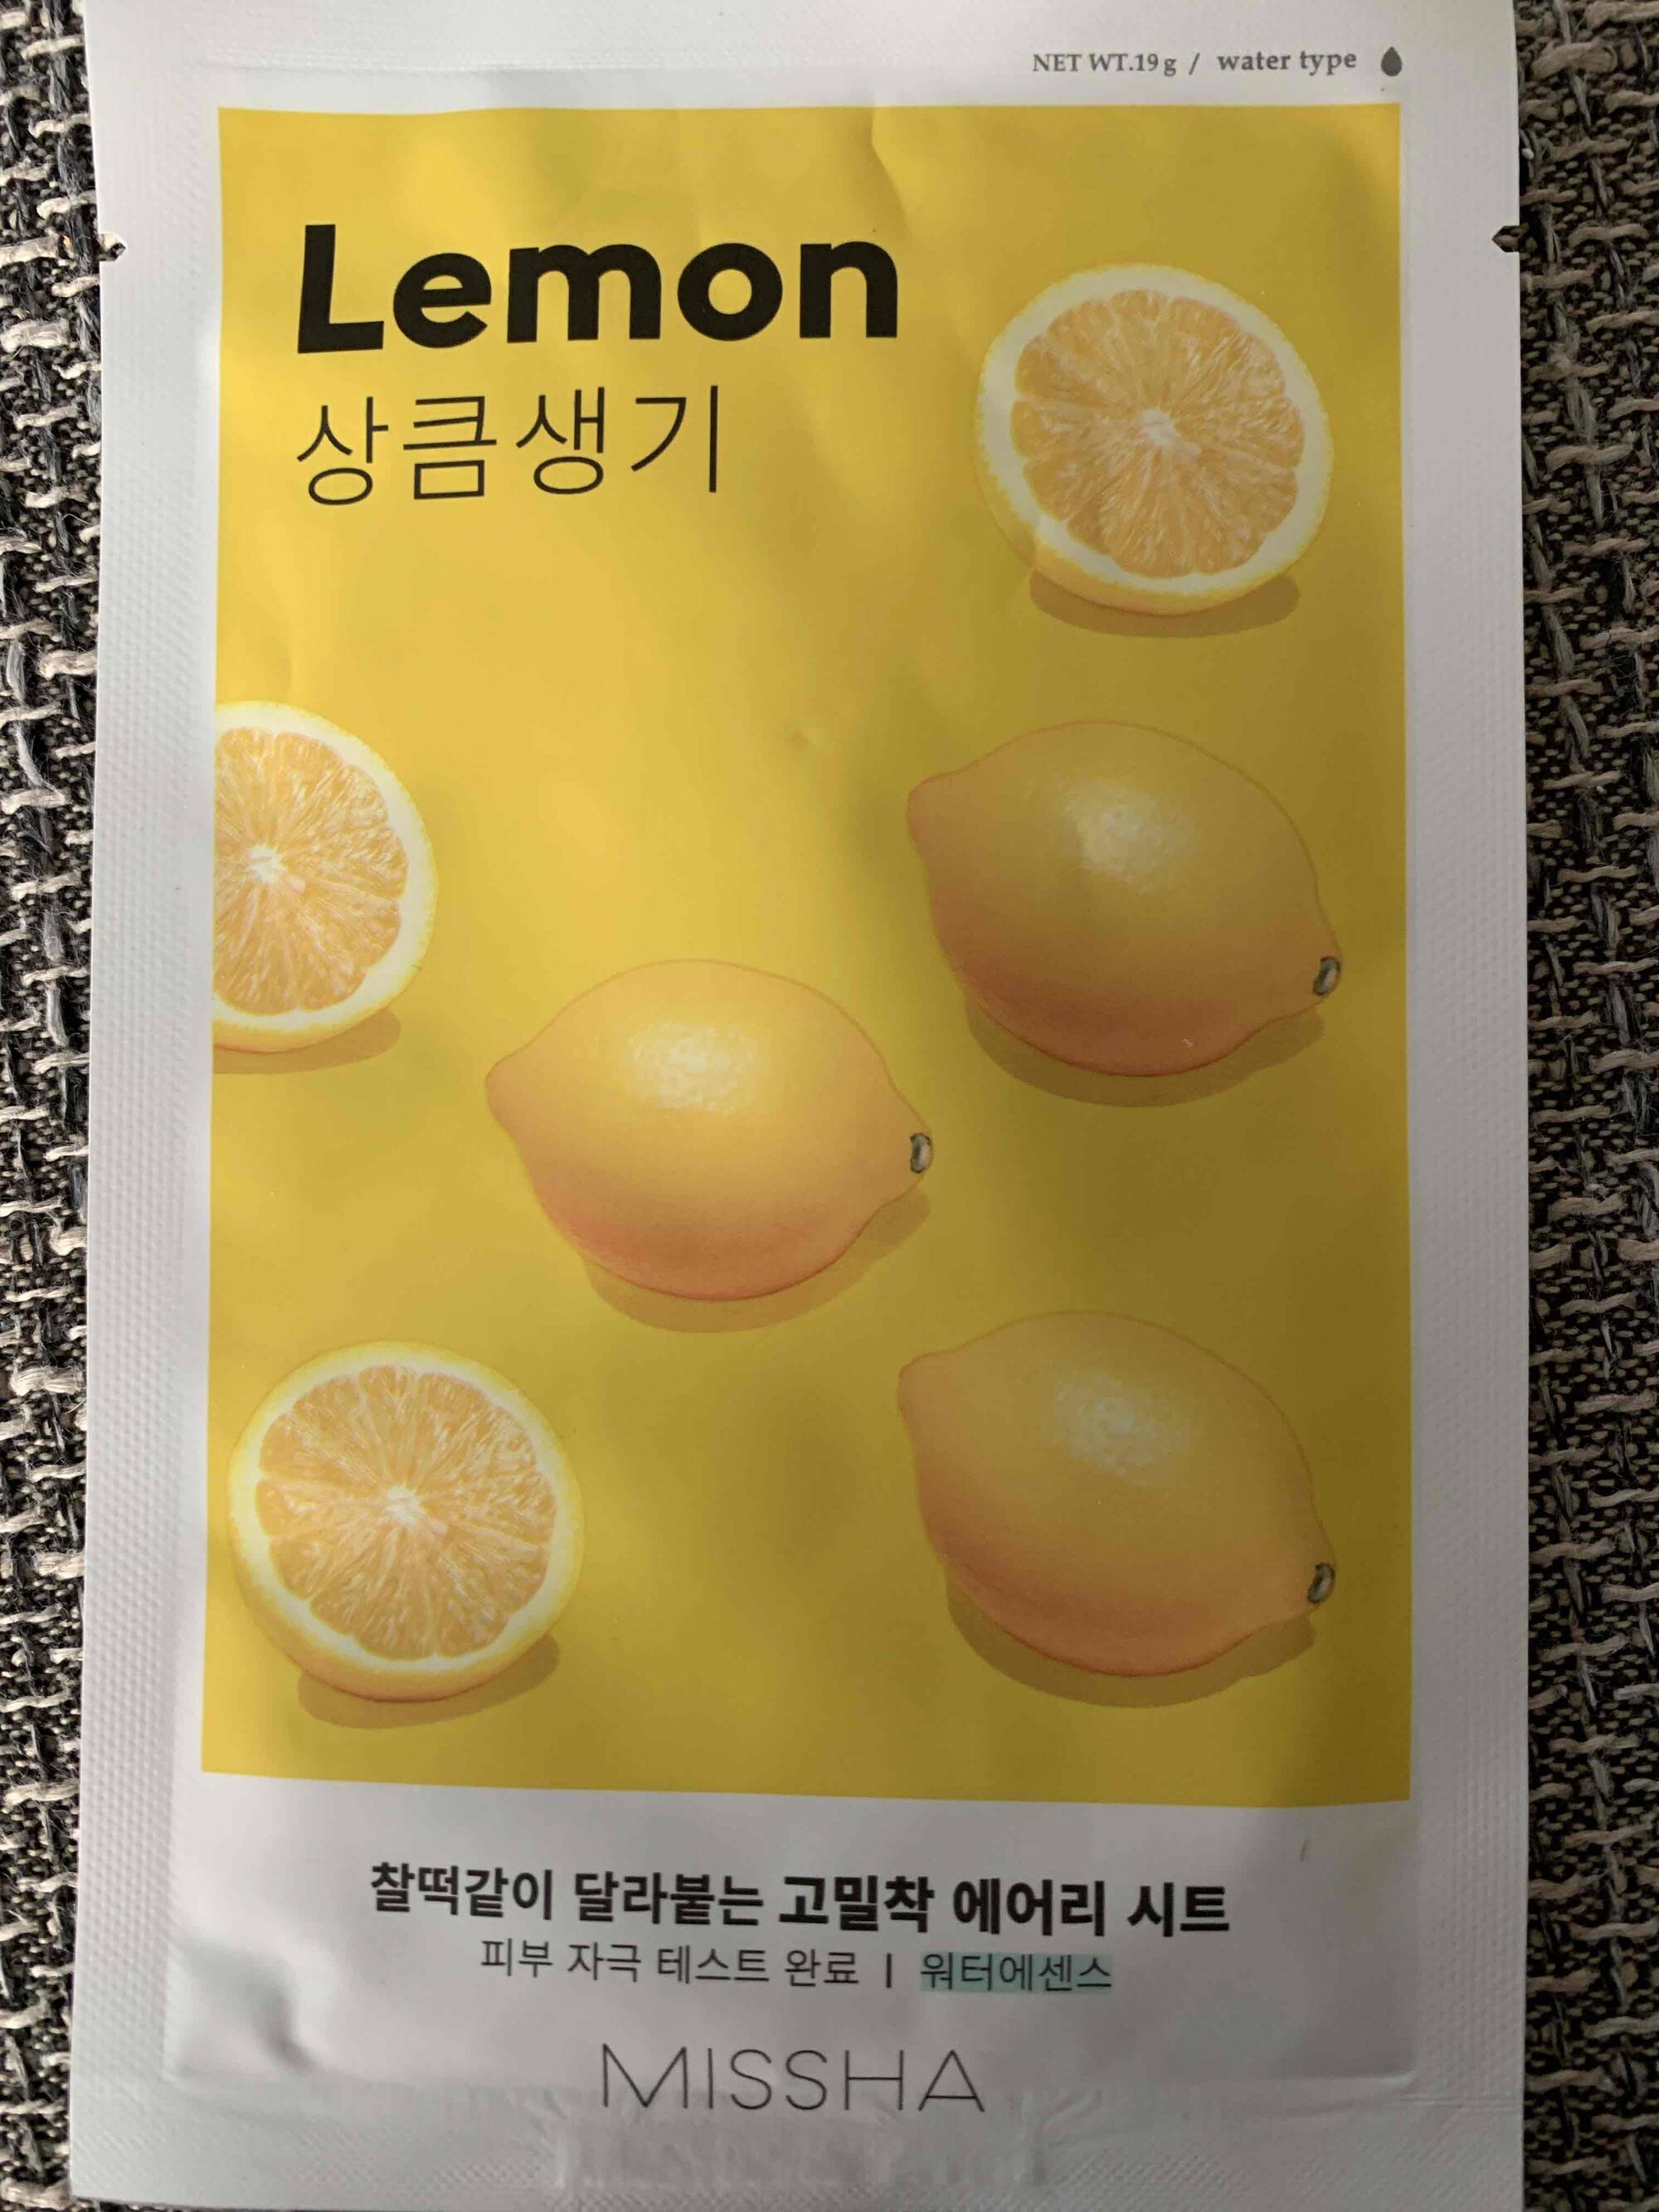 MISSHA - Lemon - Airy fit sheet mask